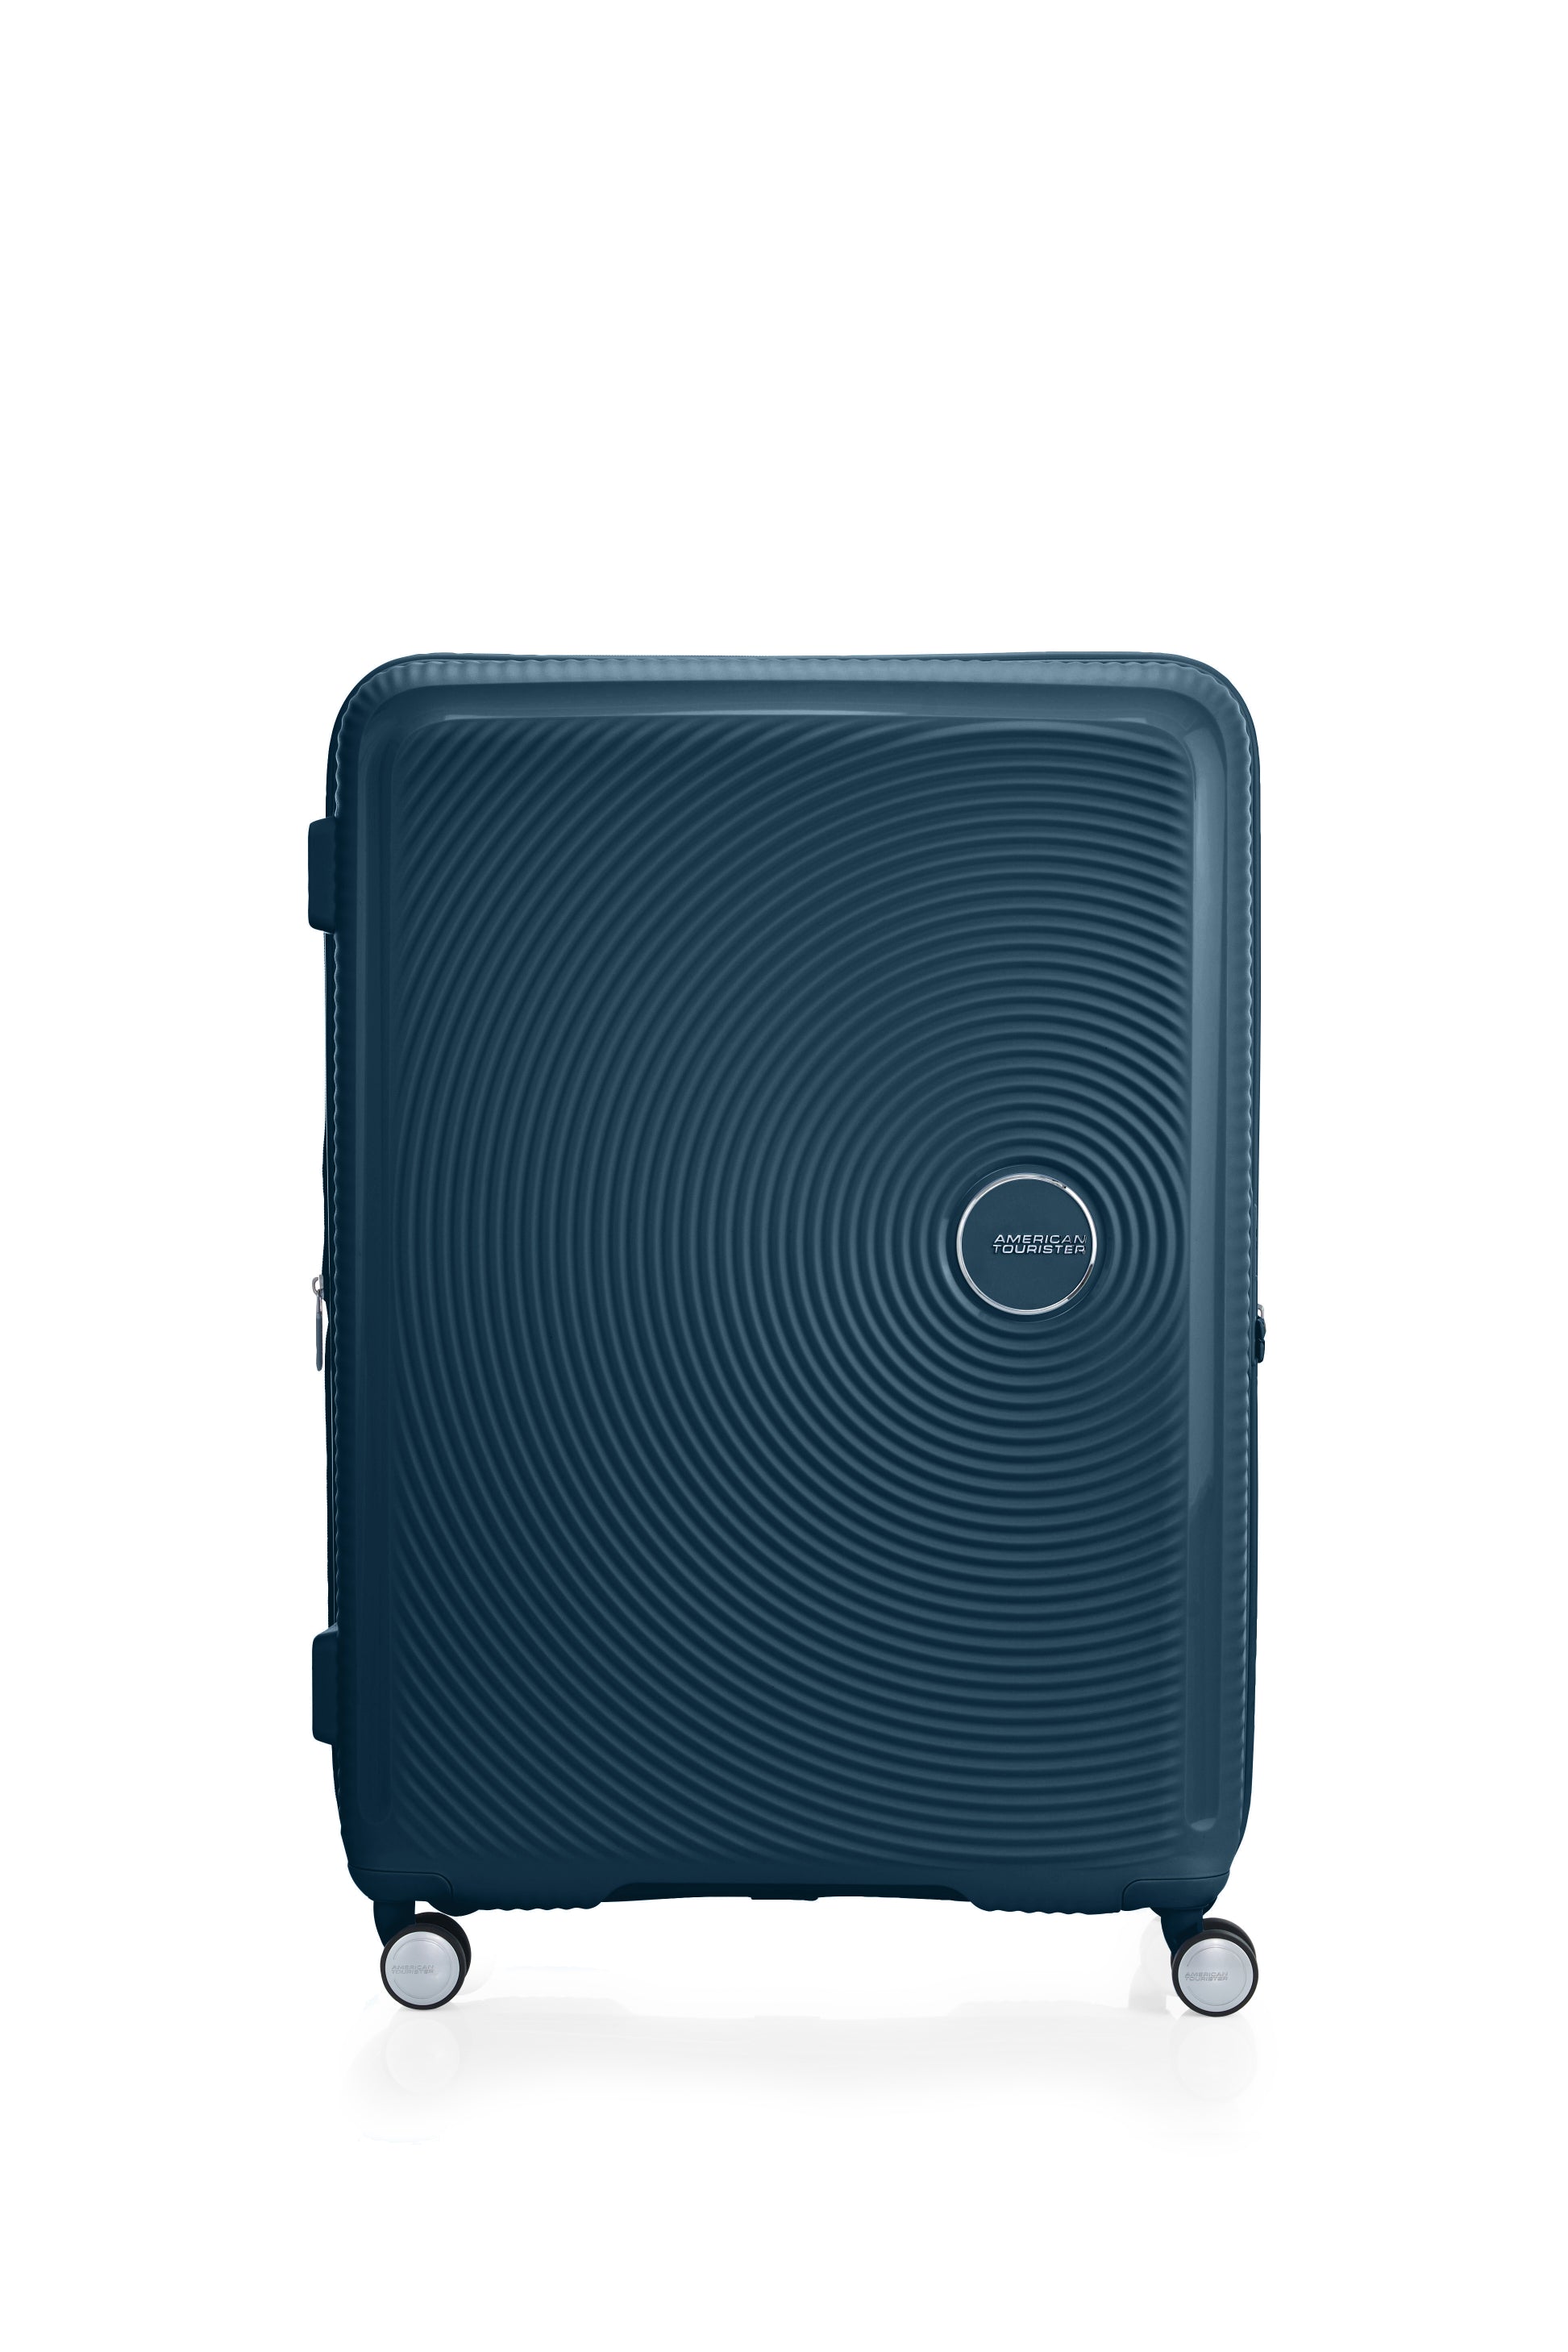 American Tourister - Curio 2.0 80cm Large Suitcase - Varsity Green-1